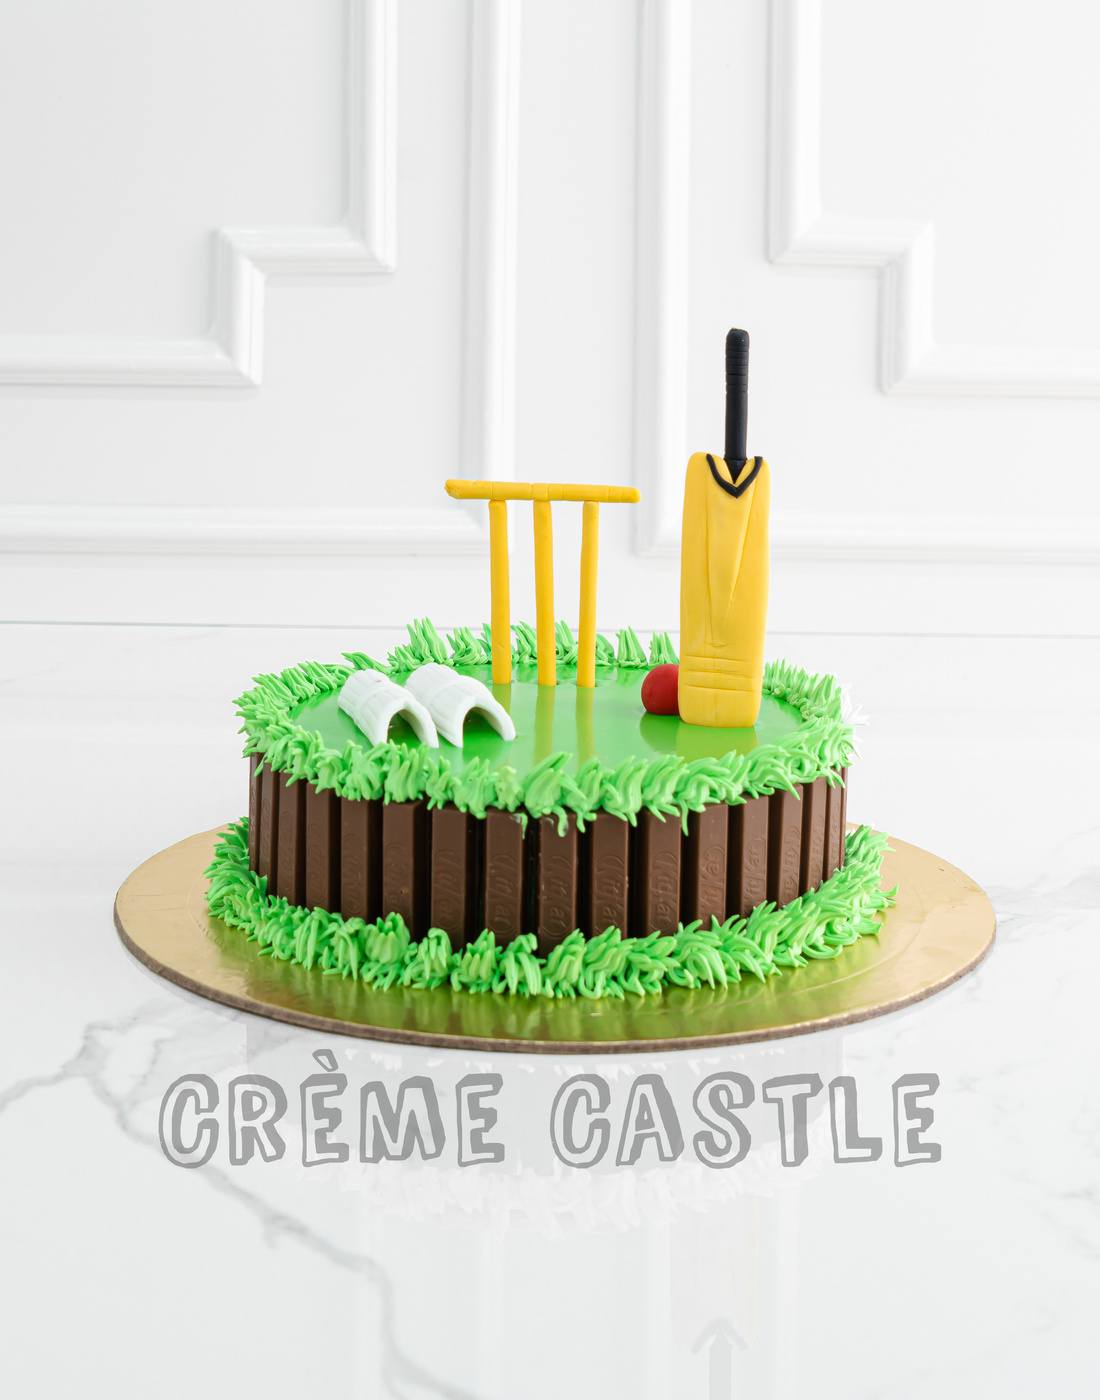 Cricket Theme Cake - Rabakes Cakes | Online Birthday Cake Delivery | Cake  Booking Online UK